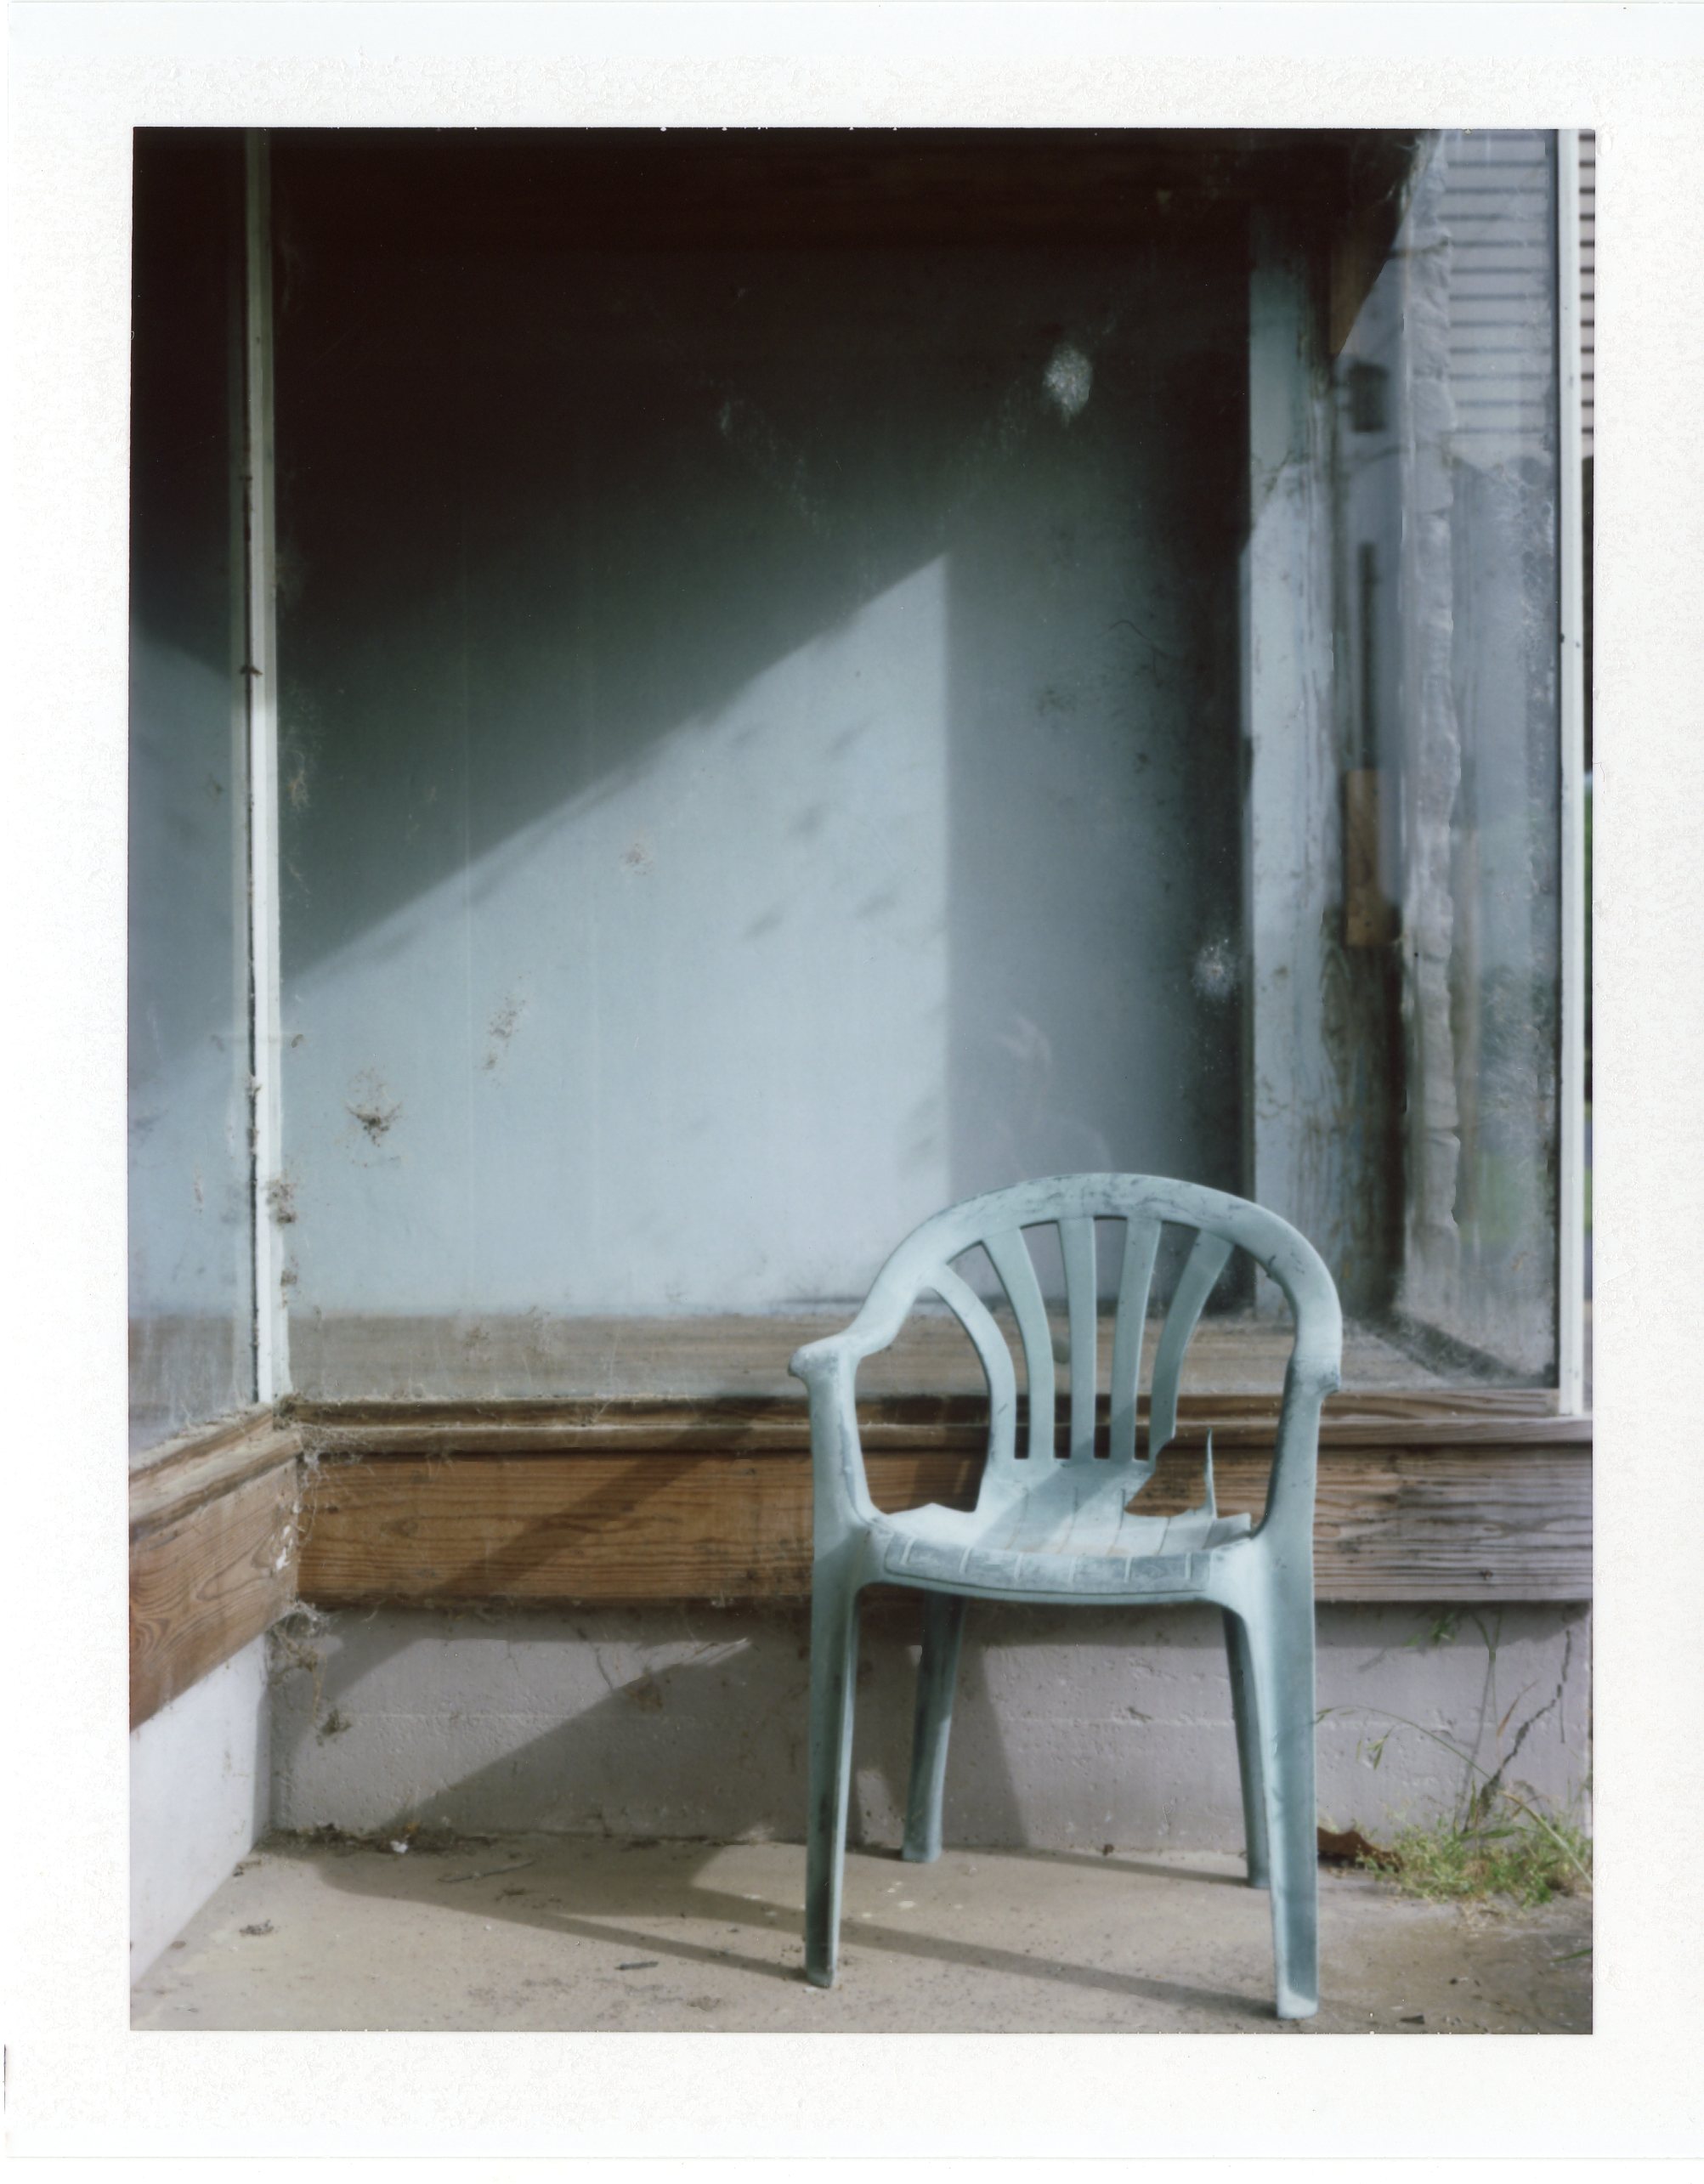 Anytown USA | Polaroid110a | Fuji FP100c | Michael Mooney